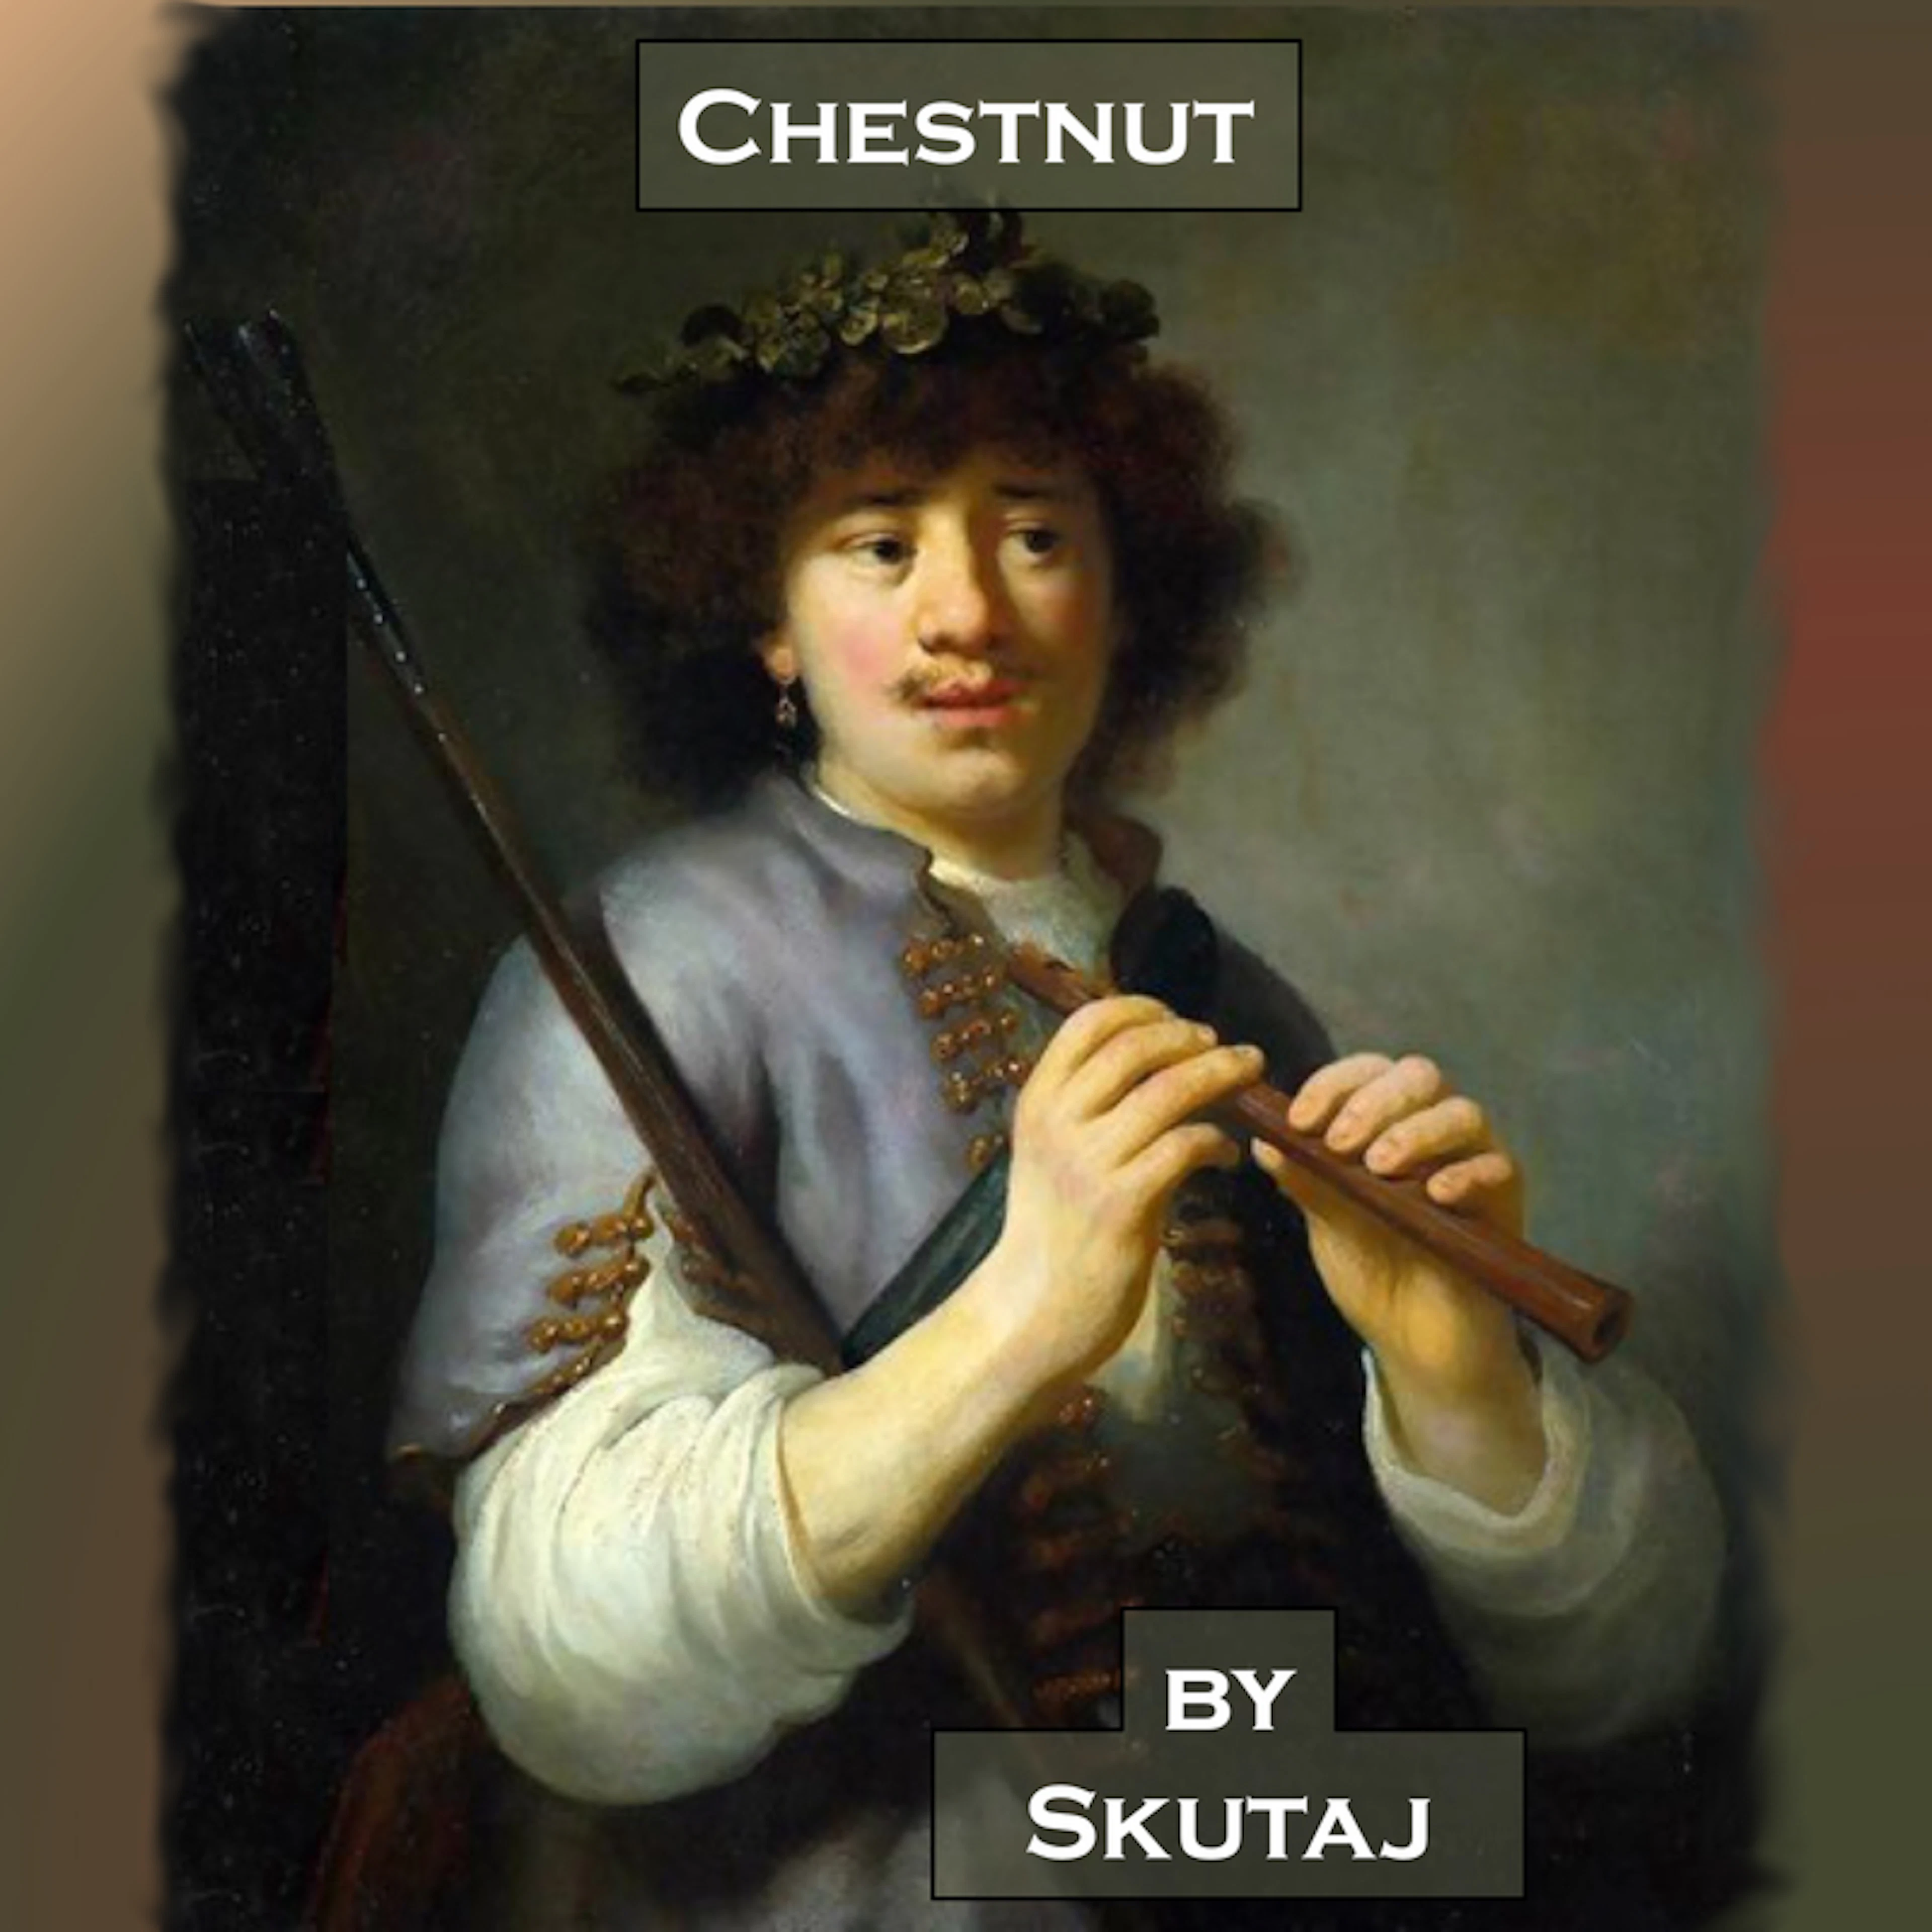 Chestnut audio track